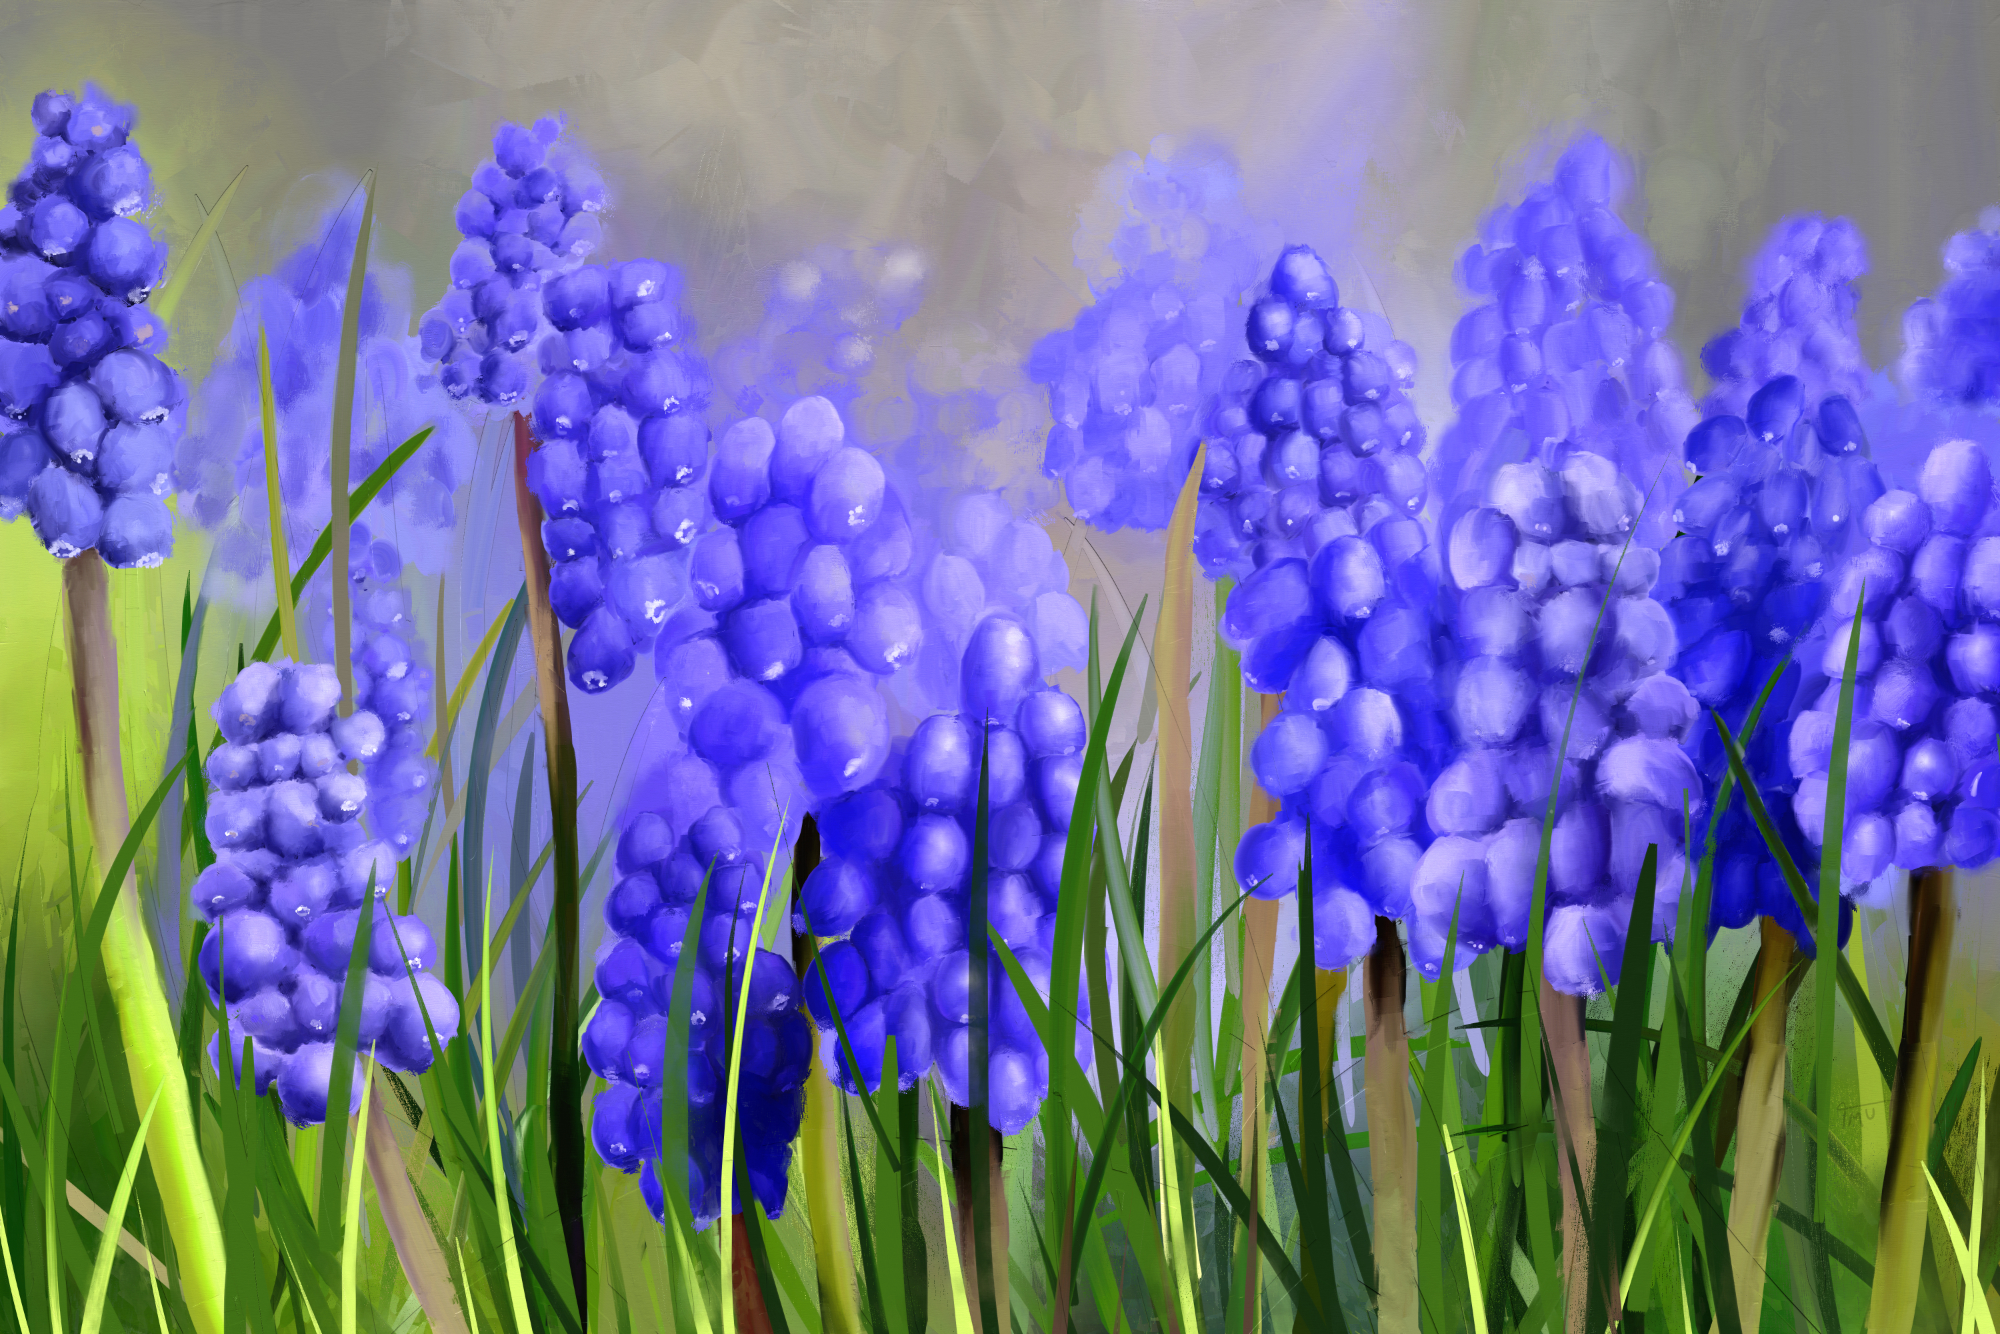 Digital acrylic painting of Grape Hyacinths in blue